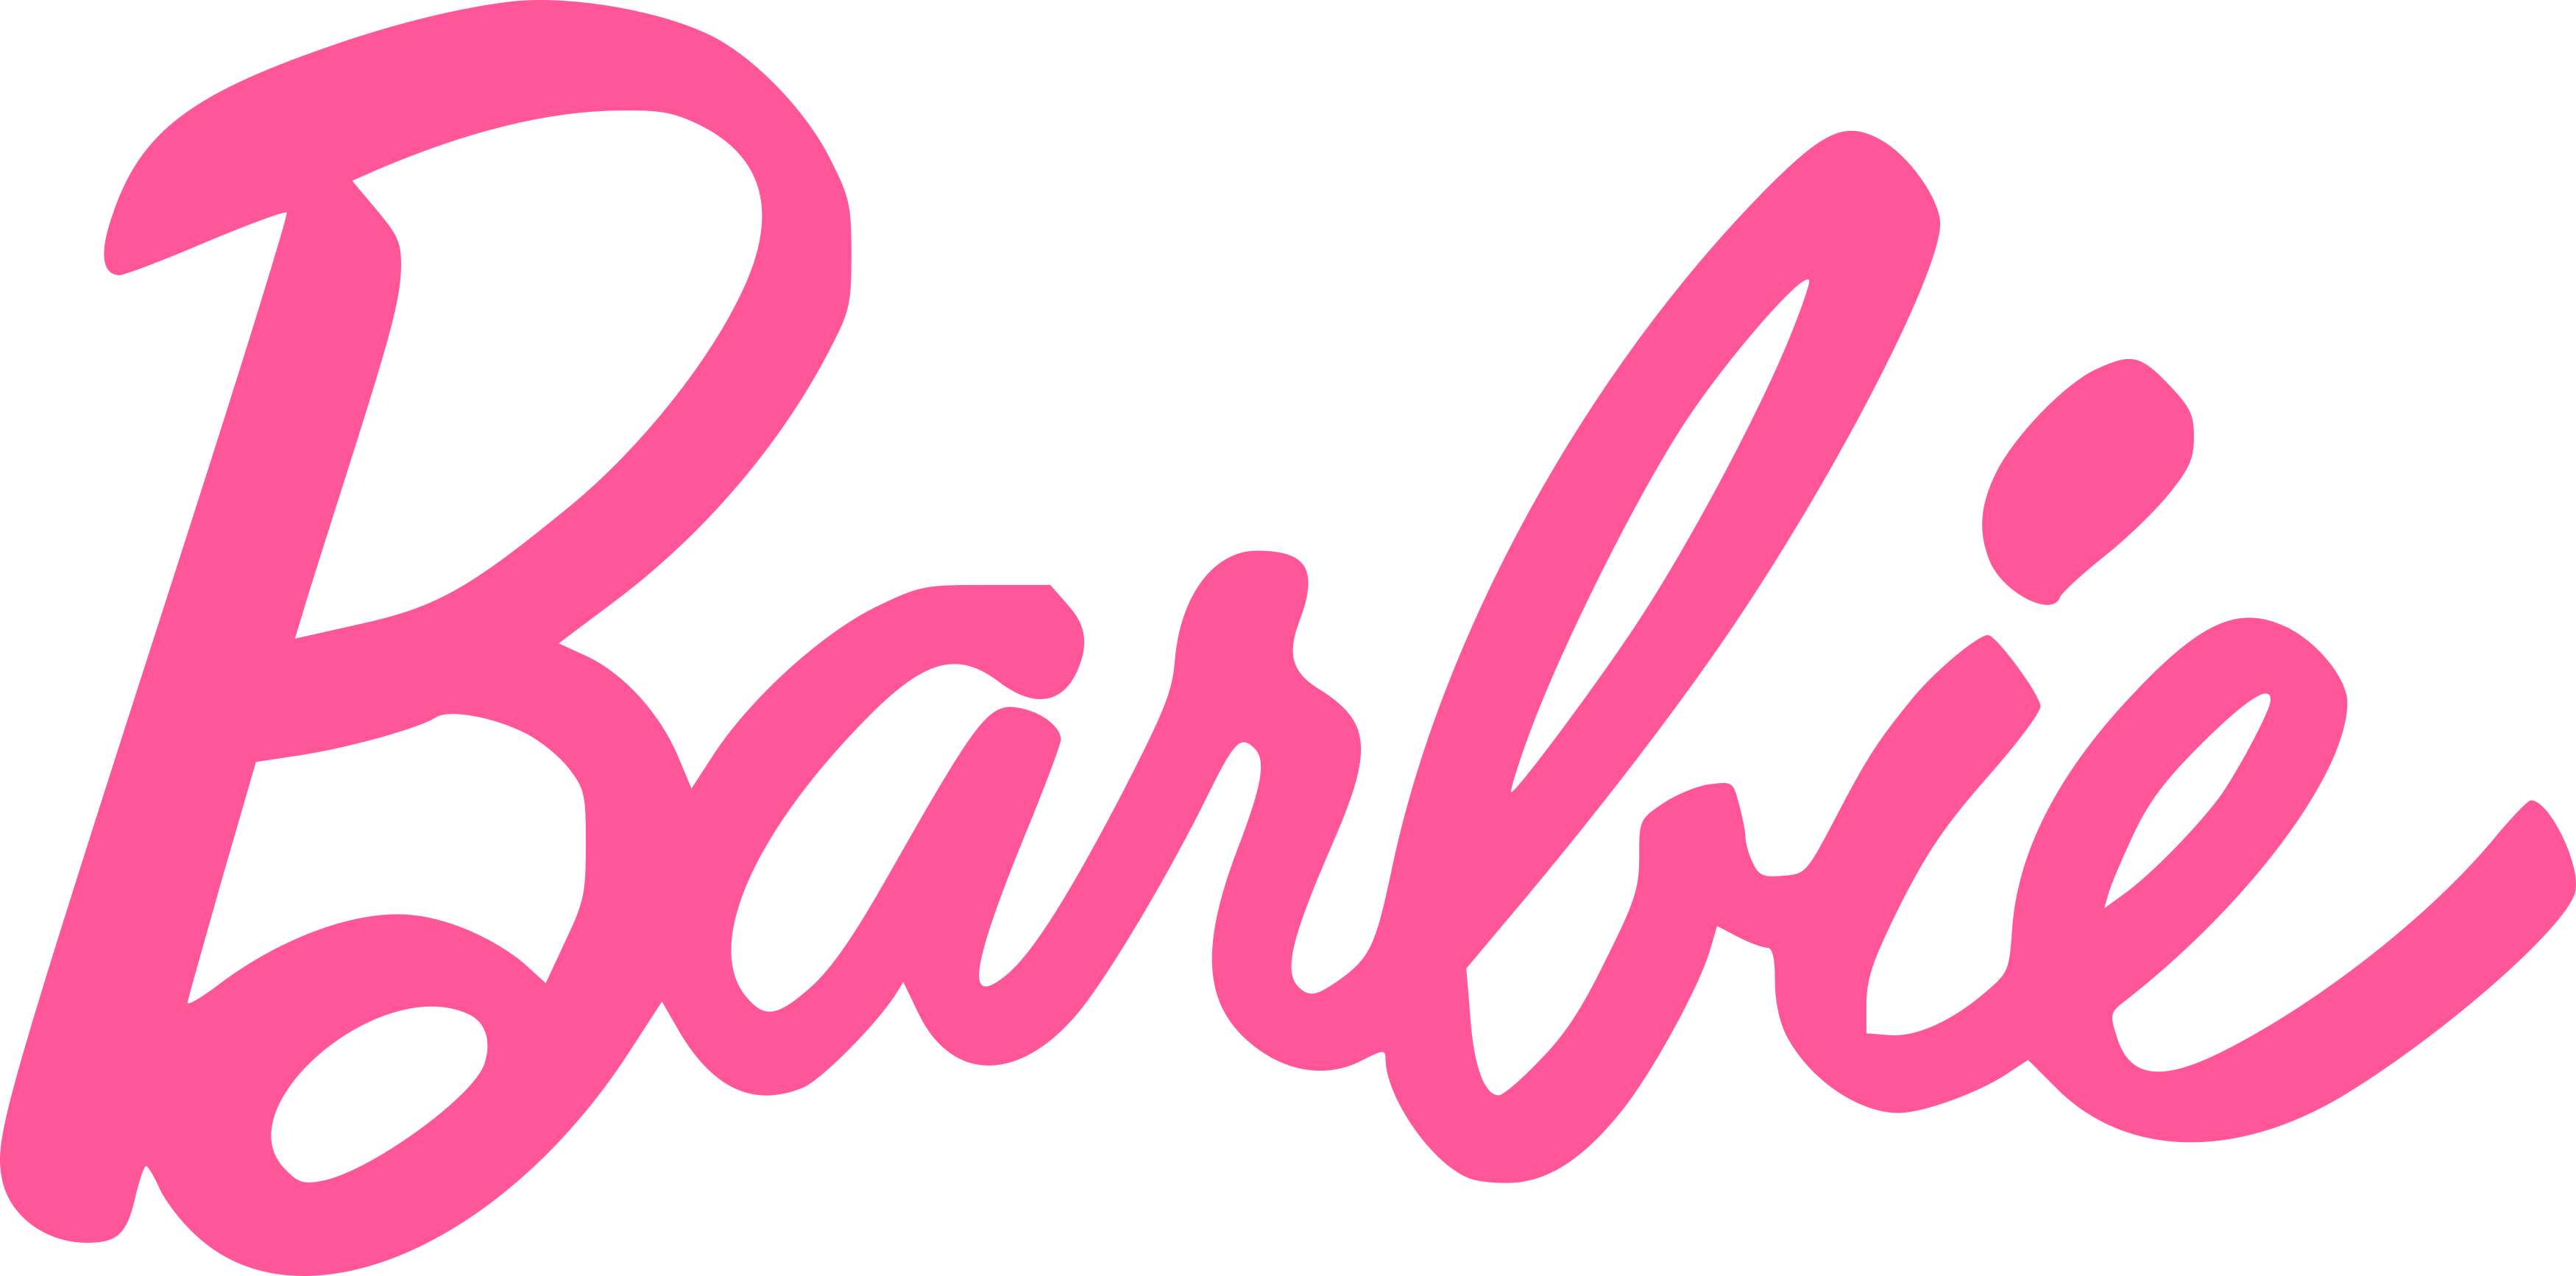 Barbie Logo.